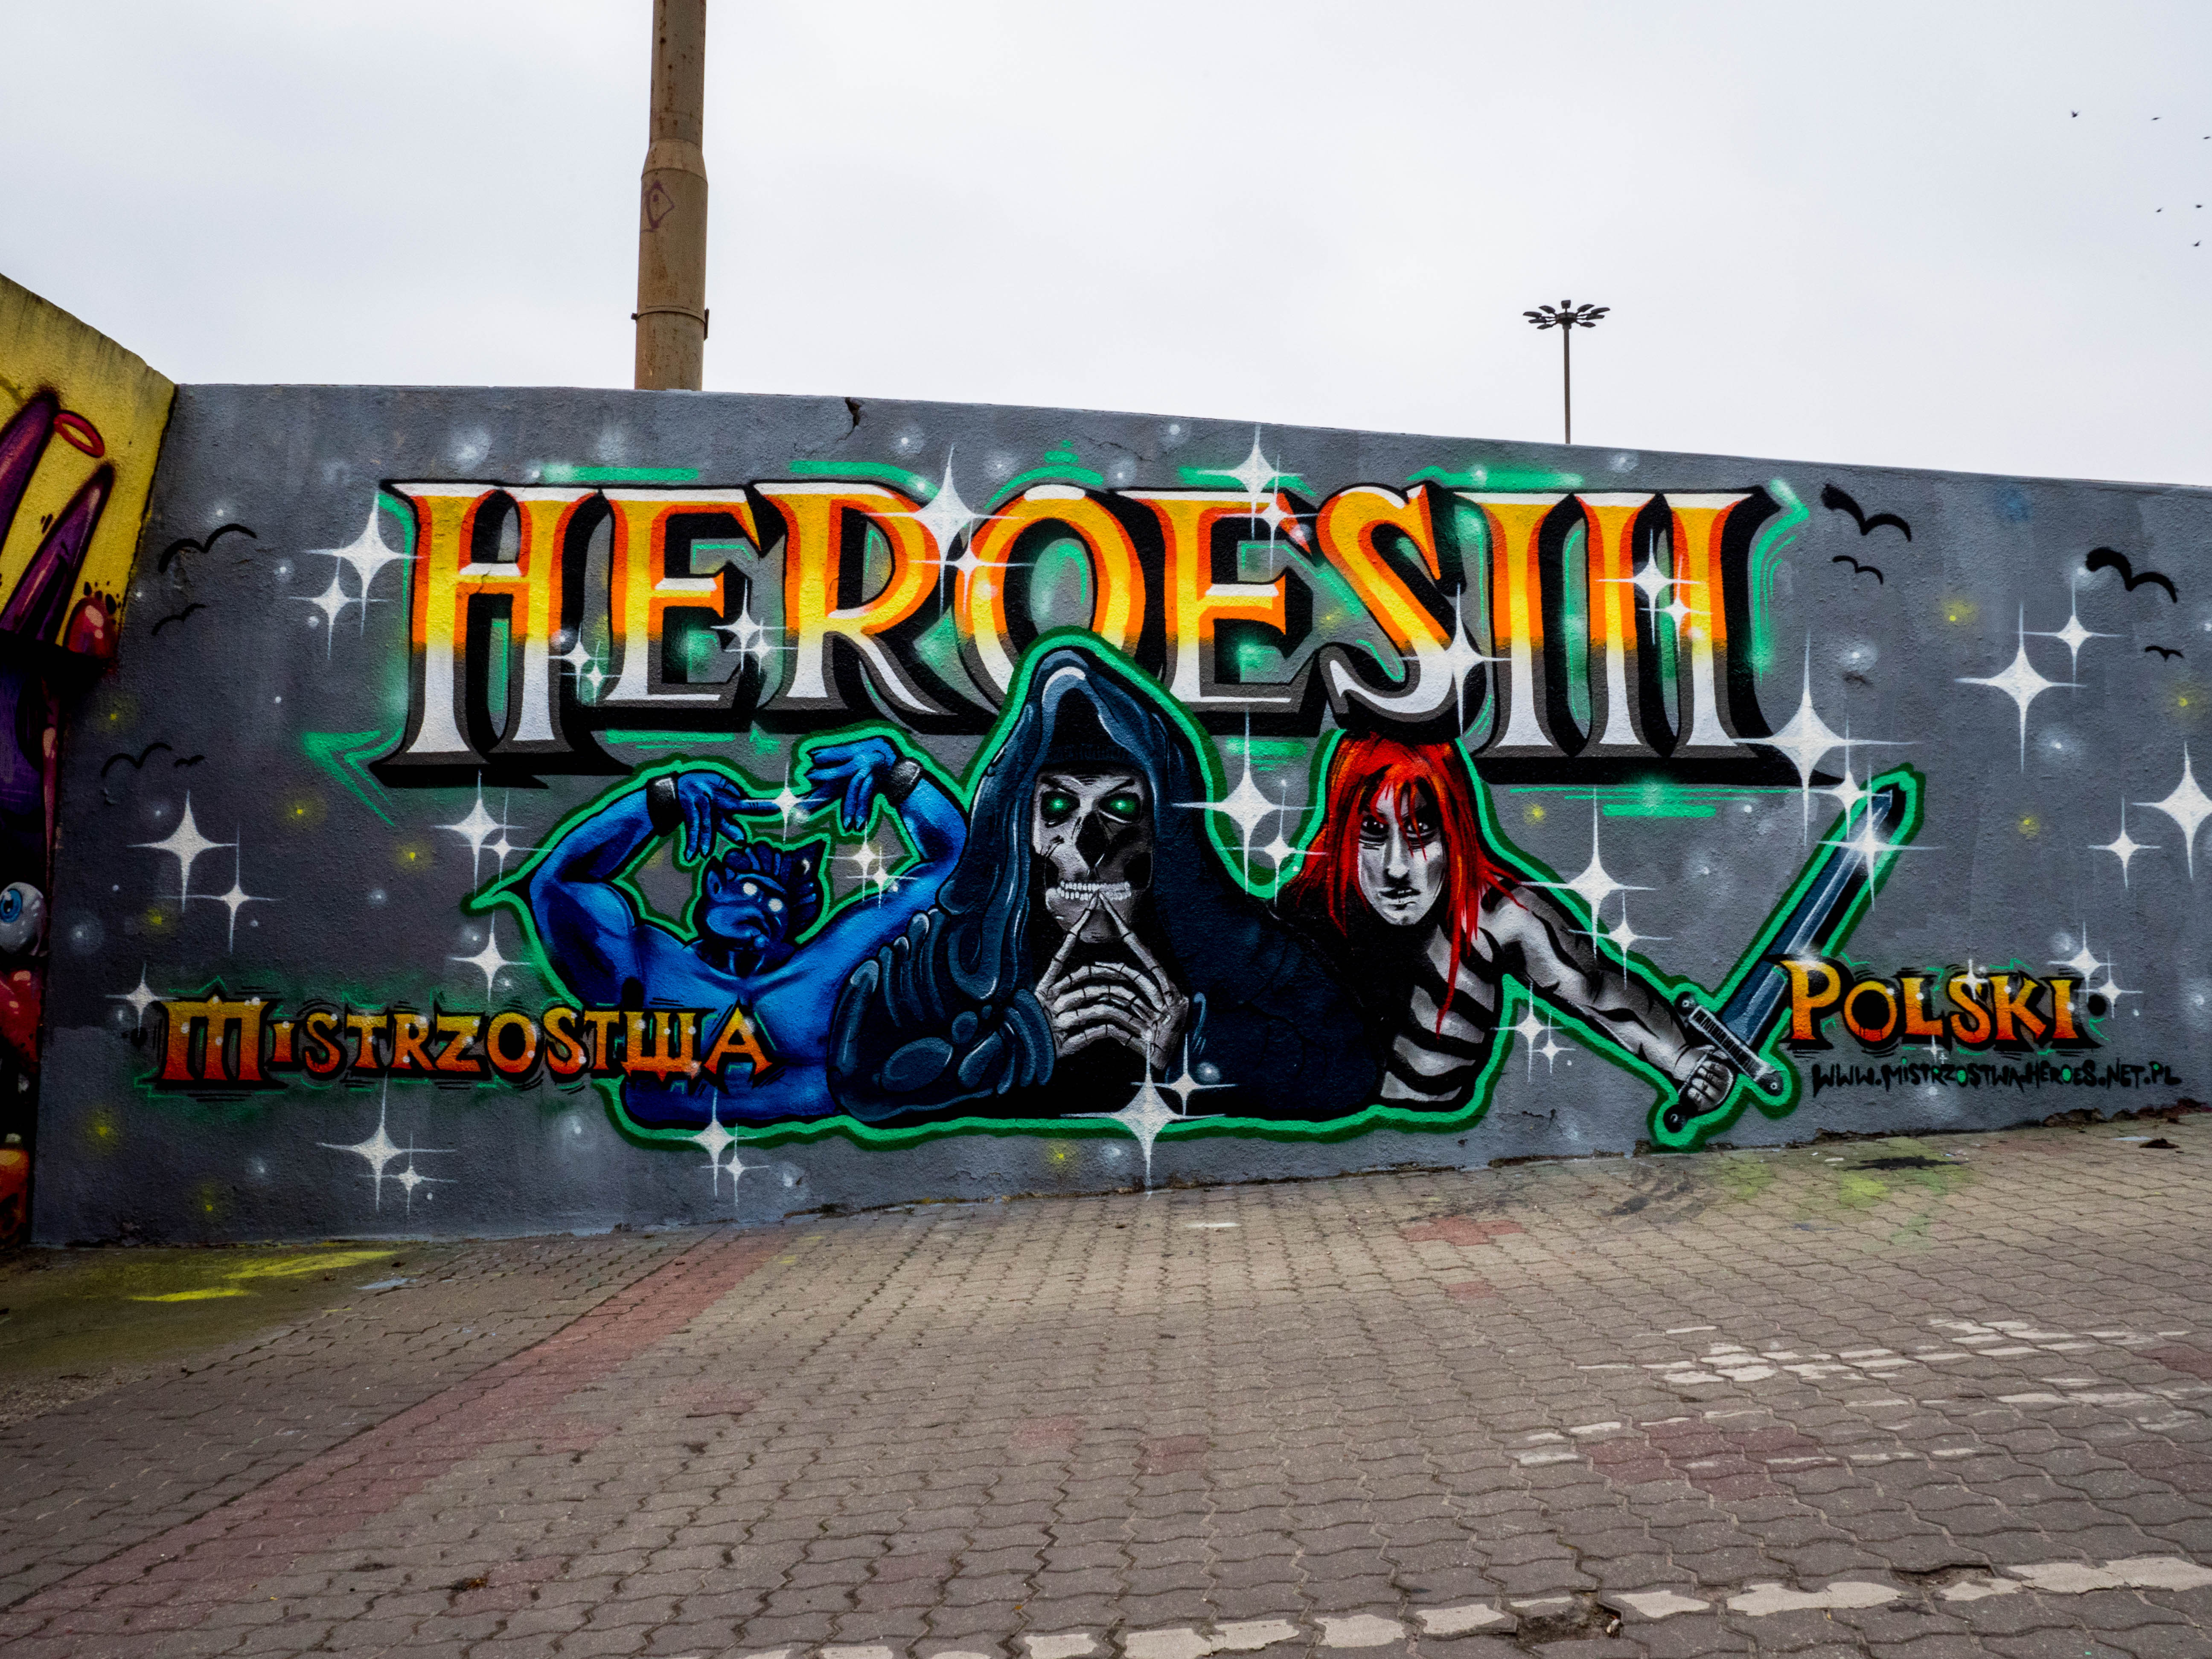 http://heroes.net.pl/uploaded/graffiti/Graffiti_1.jpg